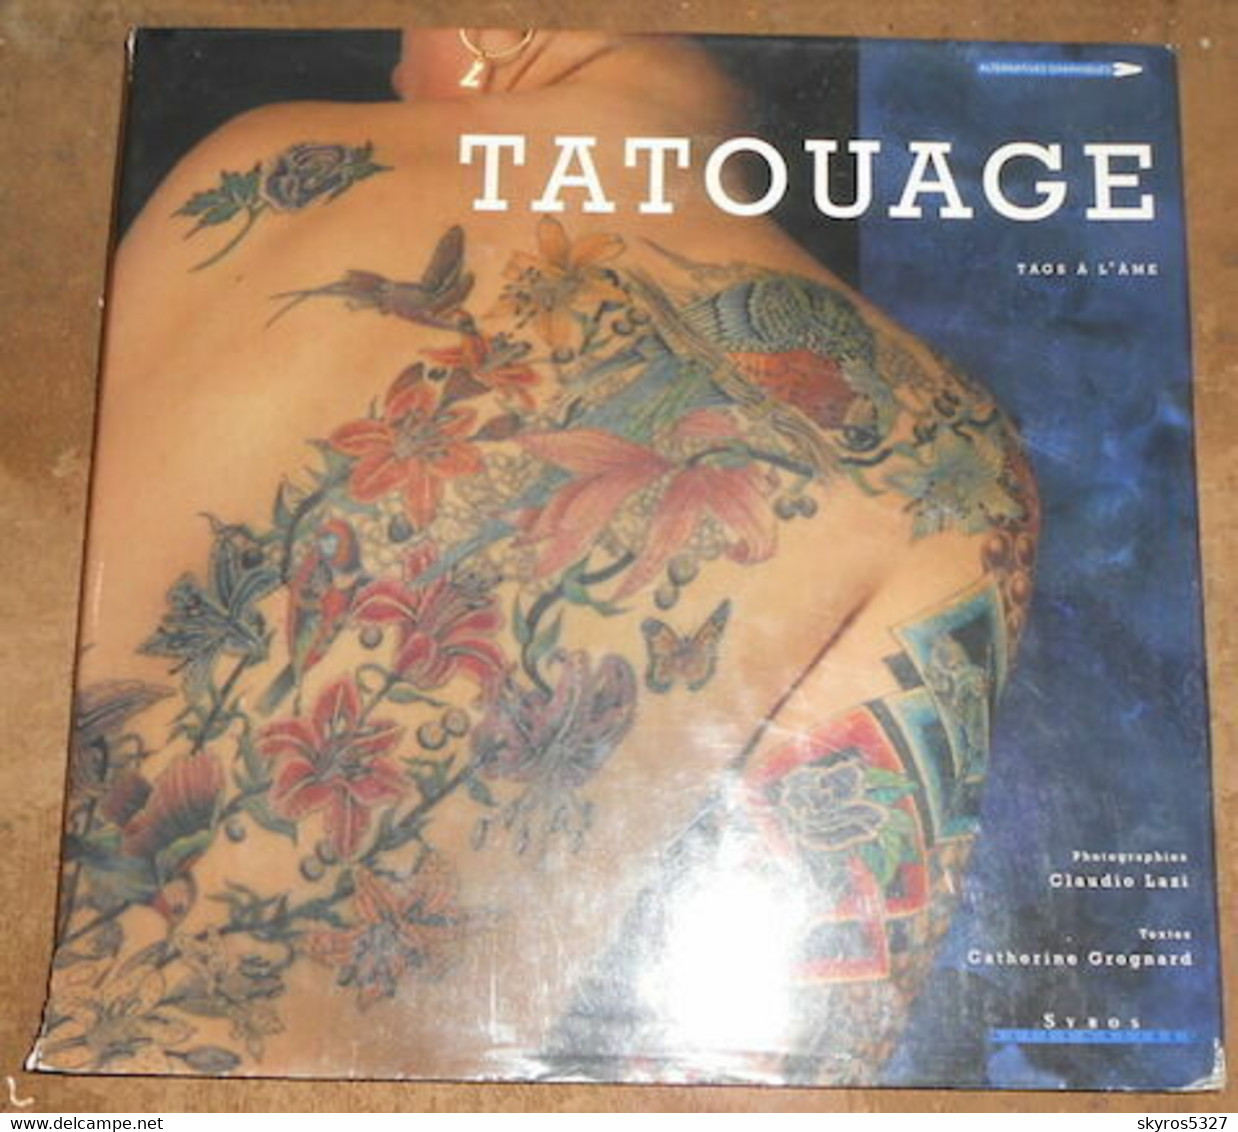 Tatouage Tags A L'Ame - Autores Franceses